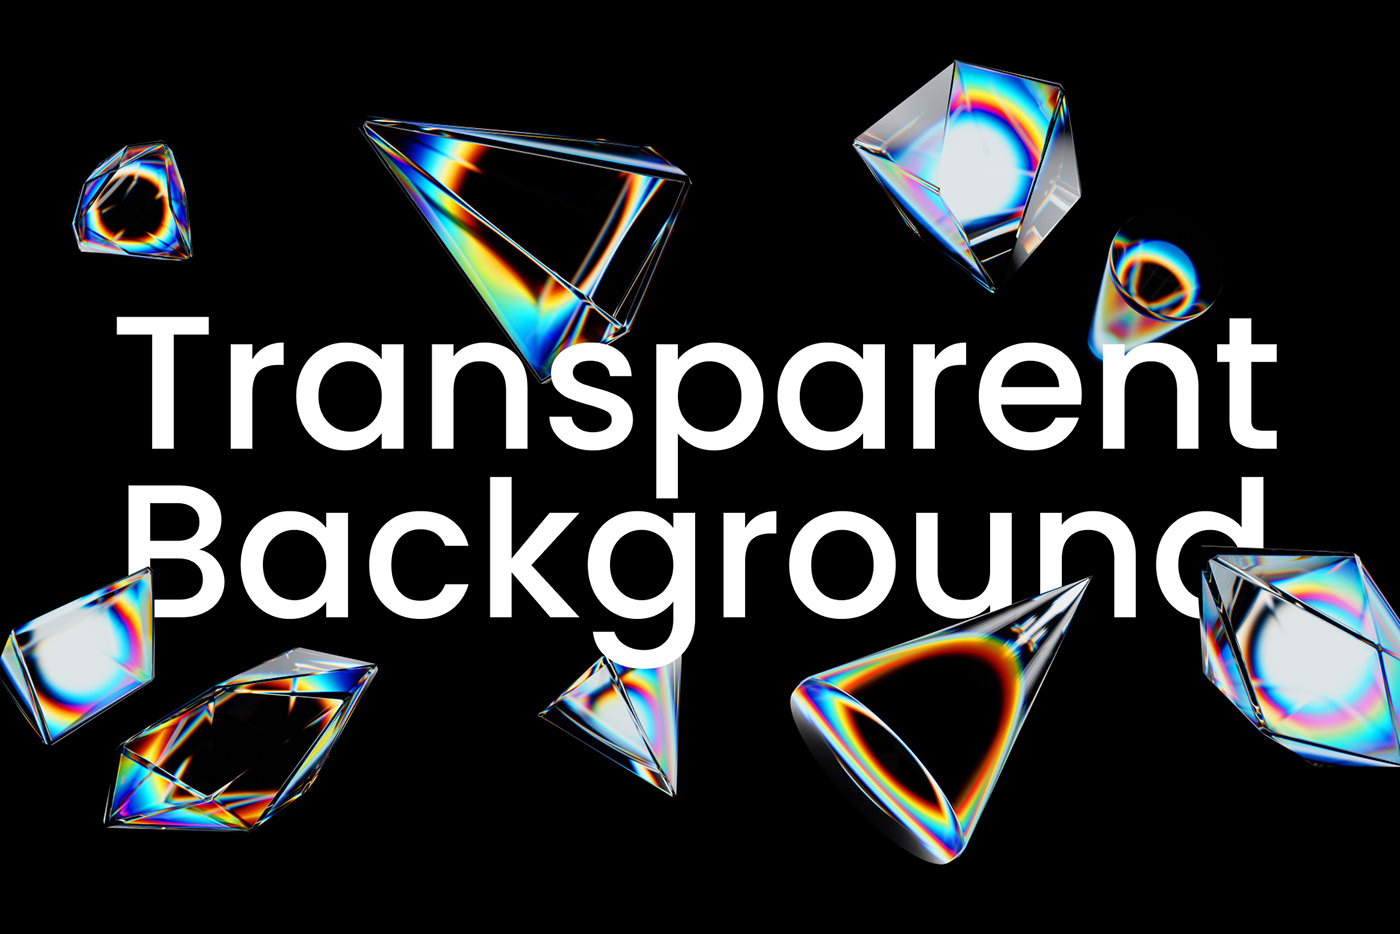 3D 3D shapes geometric prism glass dispersion assets resources download colorful